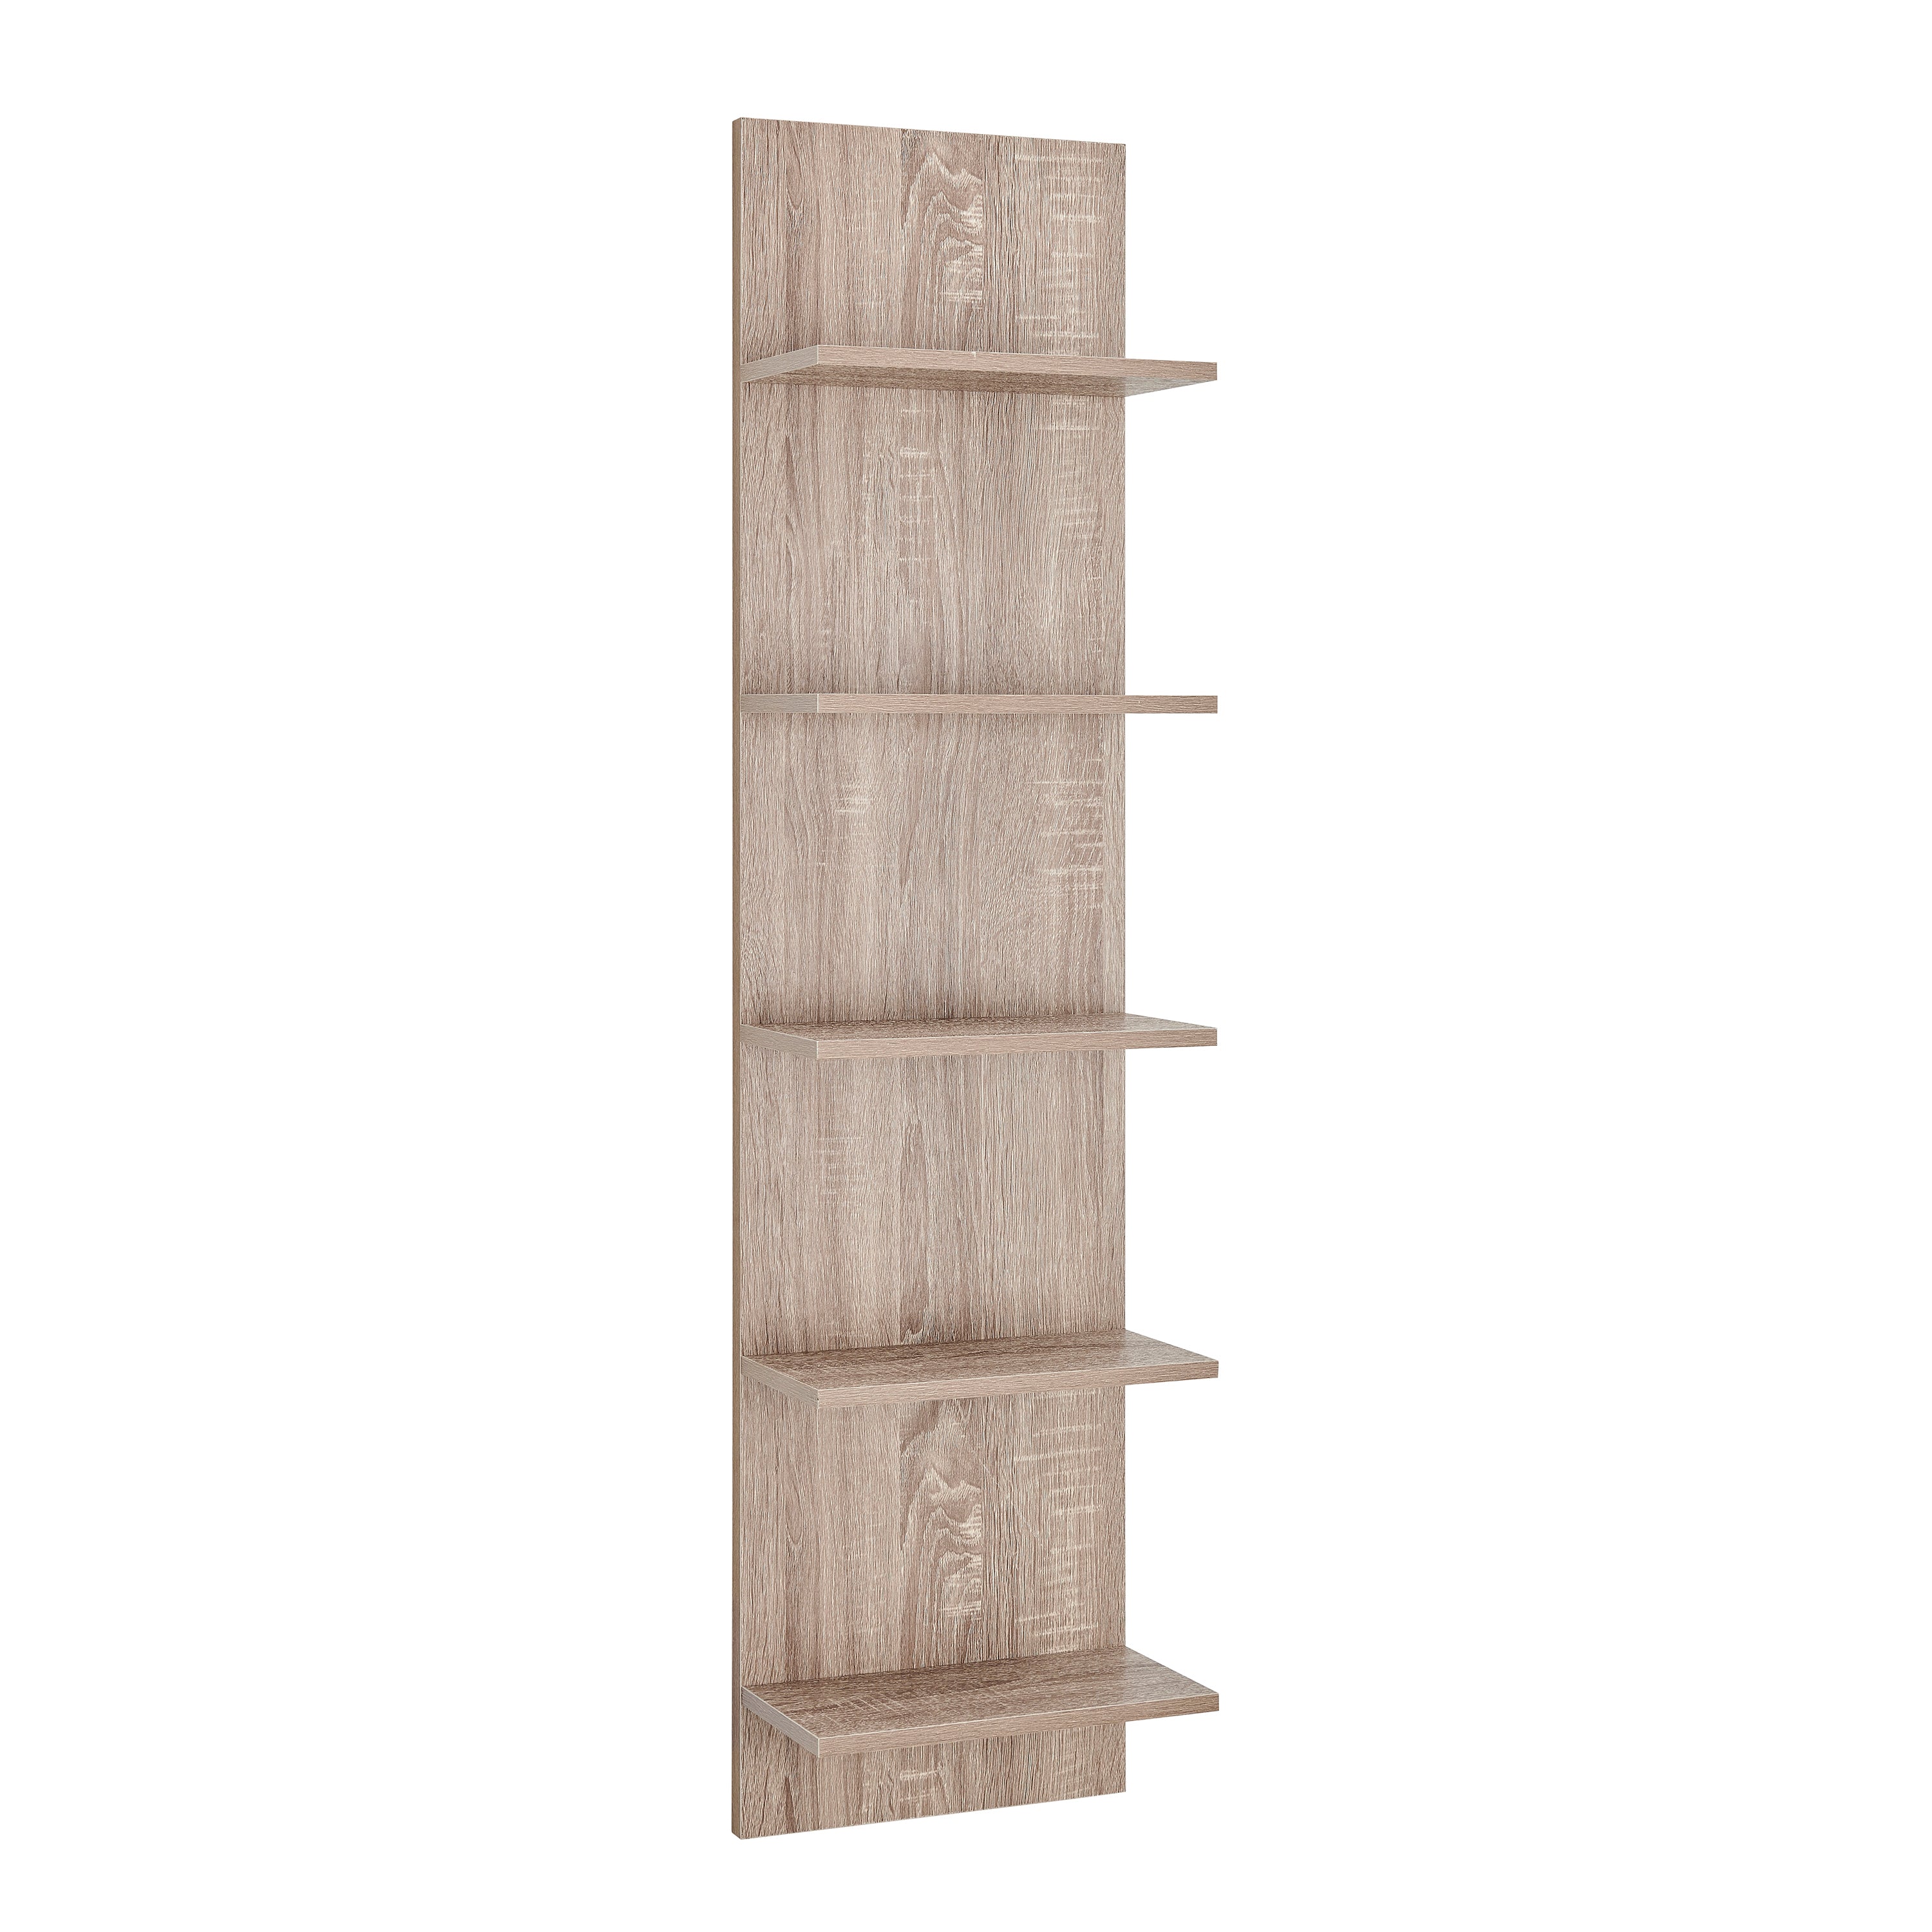 Horizontal Open Shelving Wall Unit - Fatima Furniture